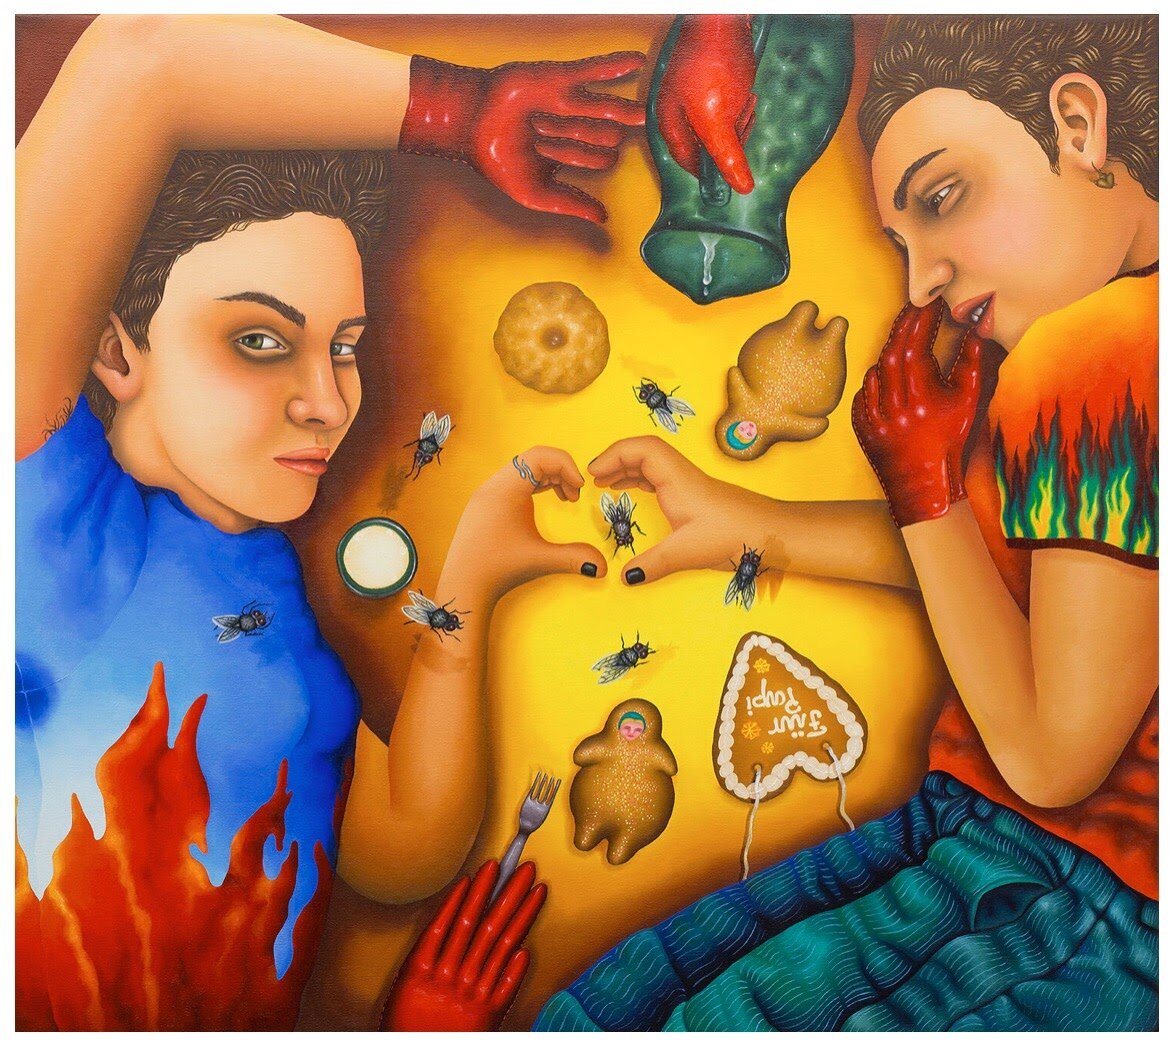   María Fragoso   Teach me sweet things II , 2020 oil on canvas 35h x 39w inches 